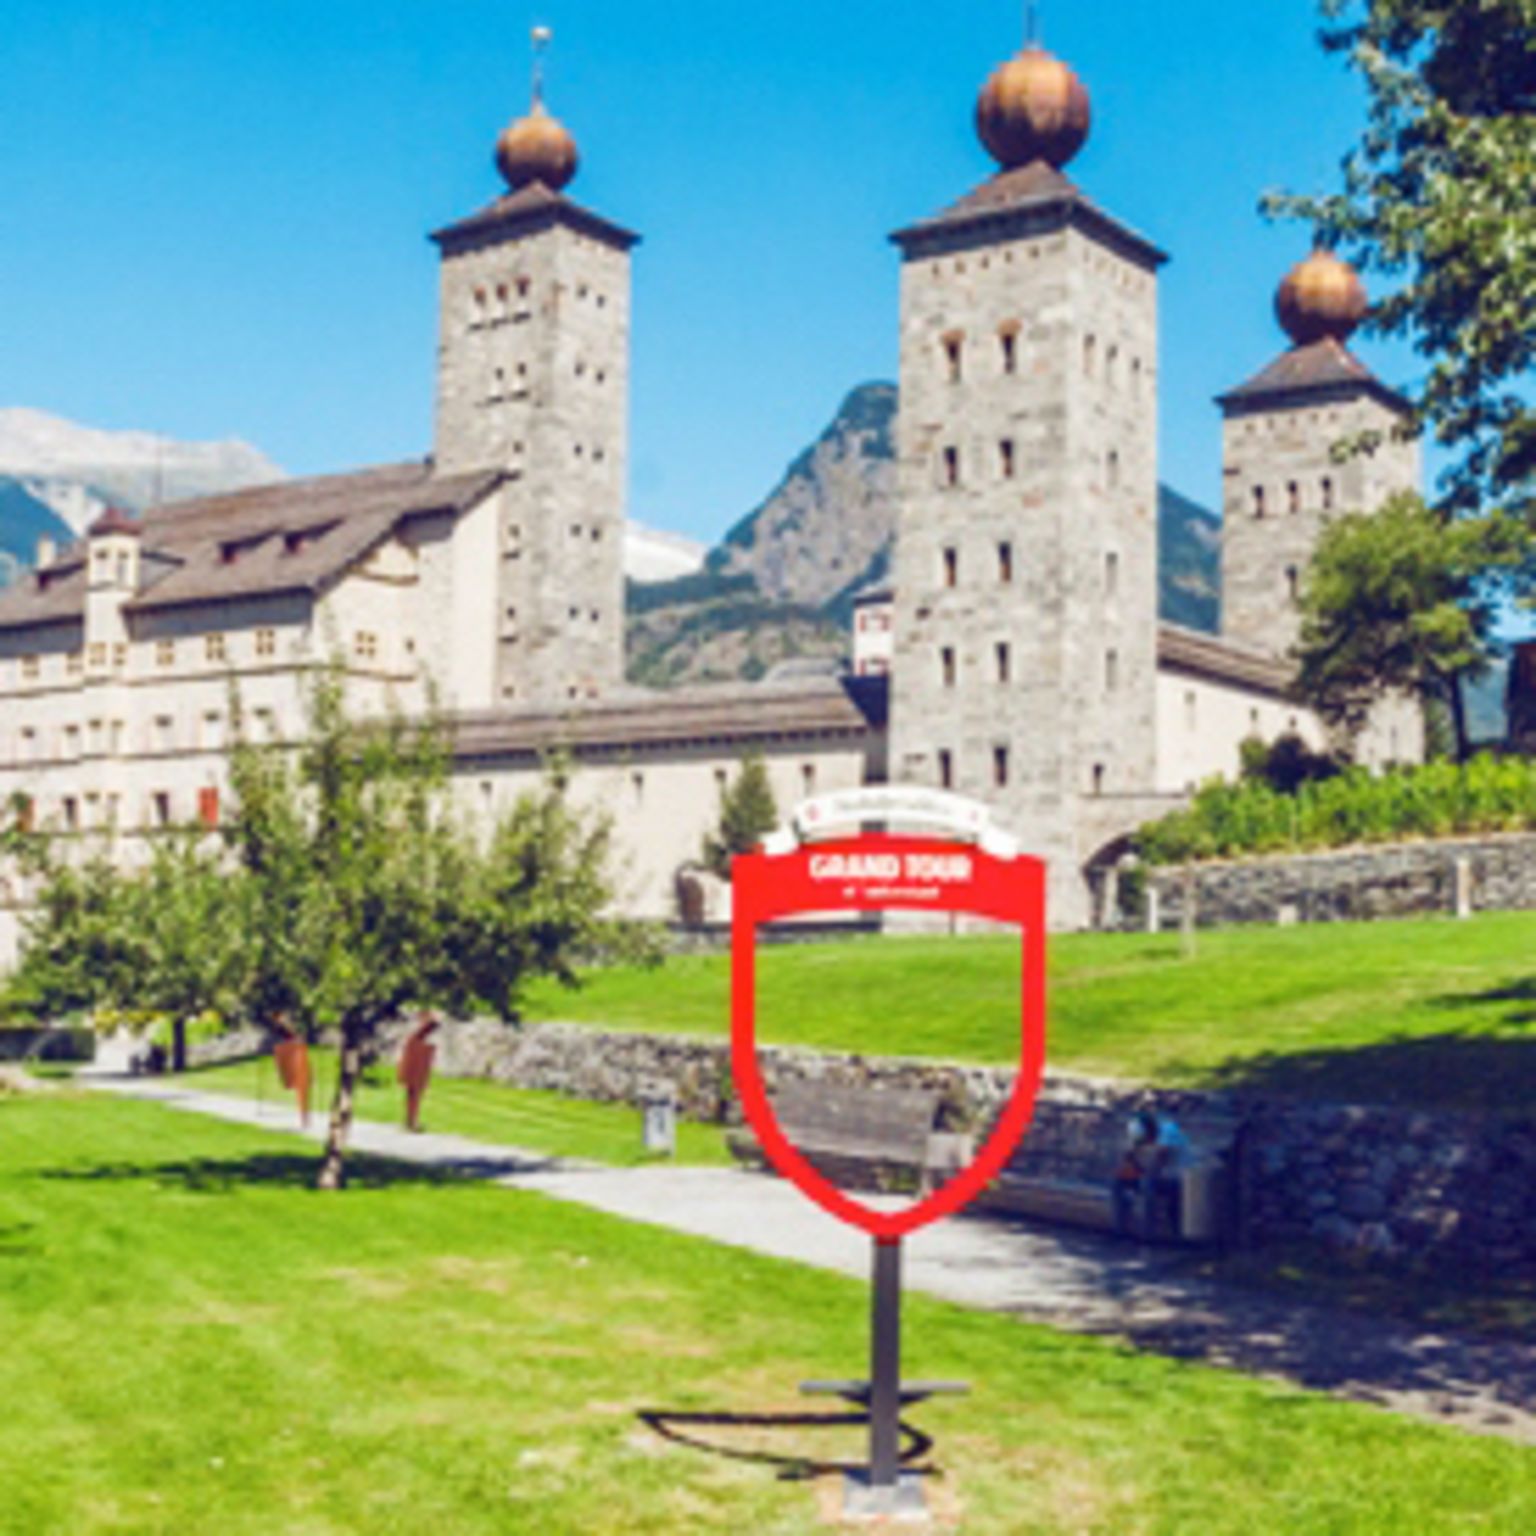 Photo spot at the Stockalper castle, Grand Tour of Switzerland, Brig, Valais